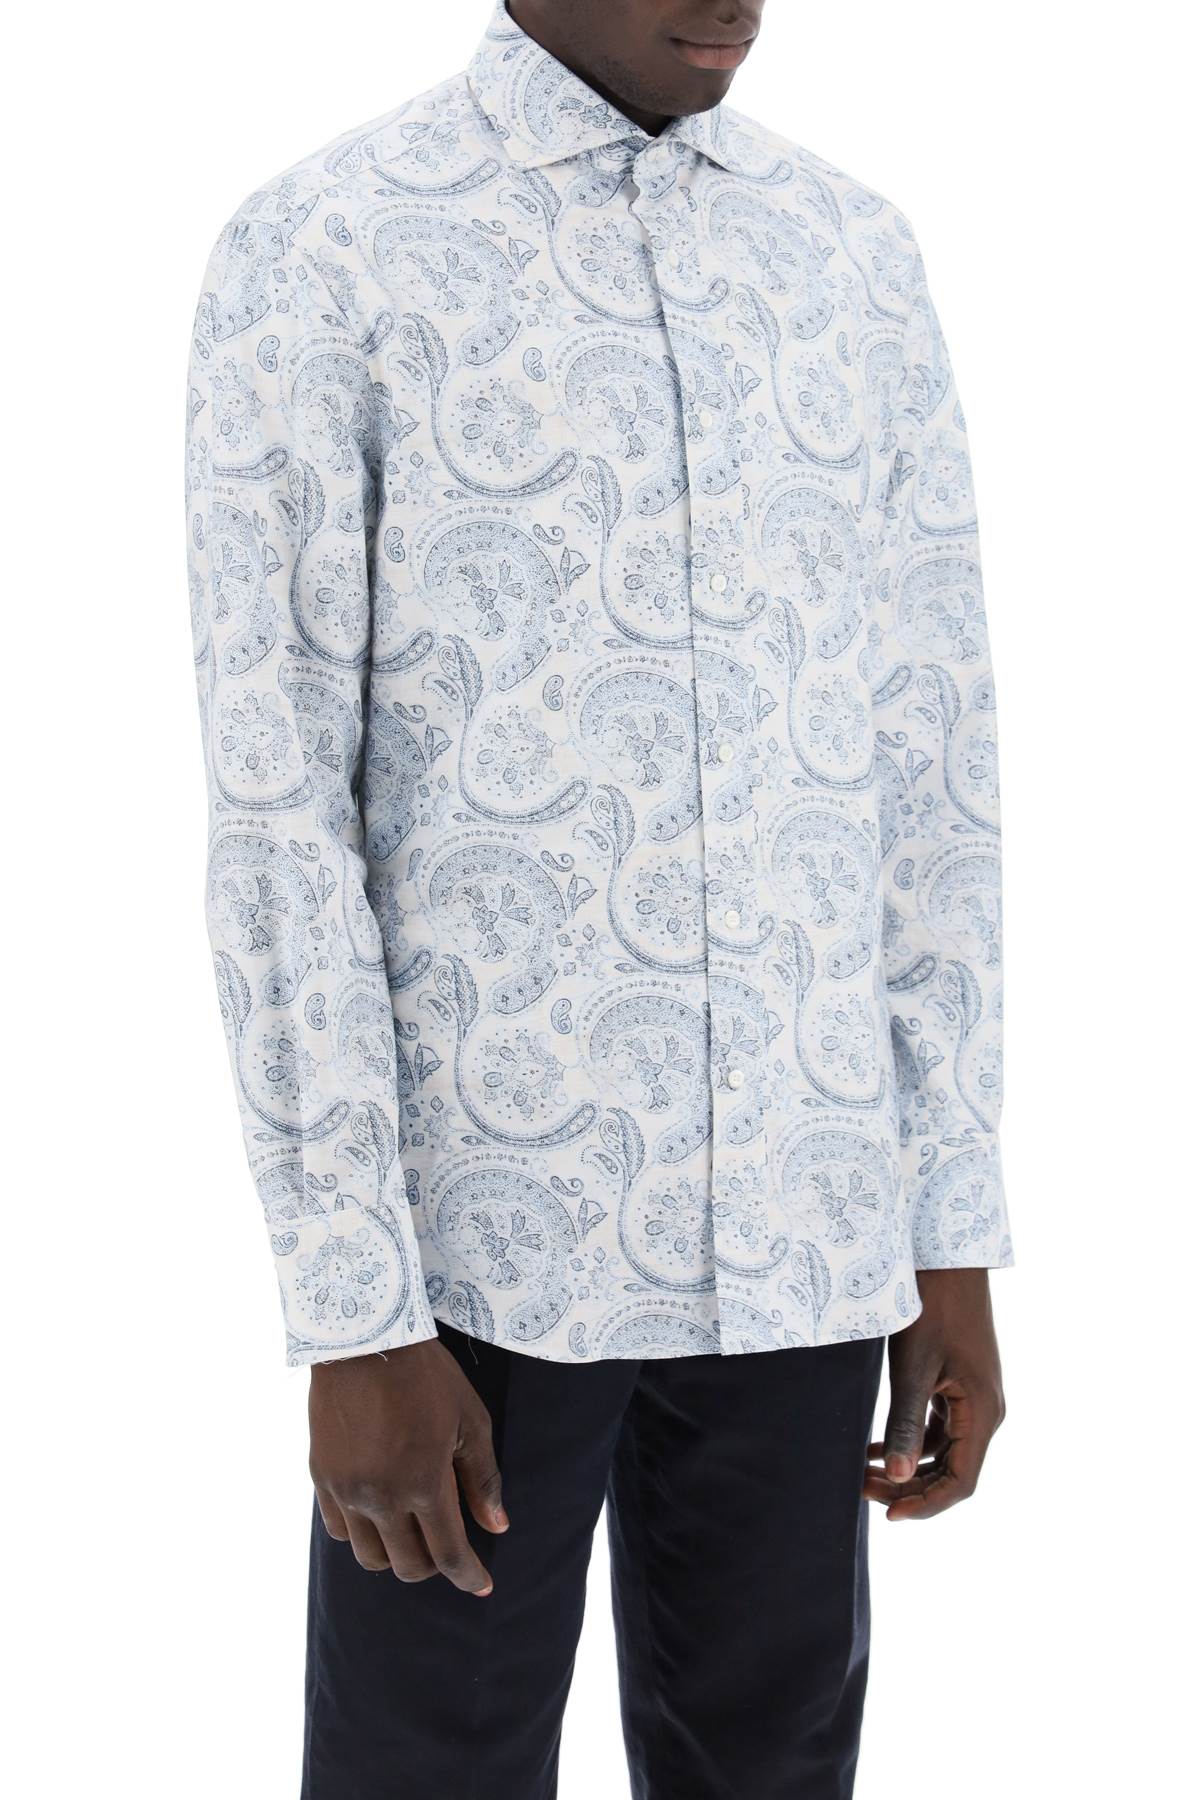 Brunello cucinelli oxford shirt with paisley pattern-men > clothing > shirts-Brunello Cucinelli-Urbanheer